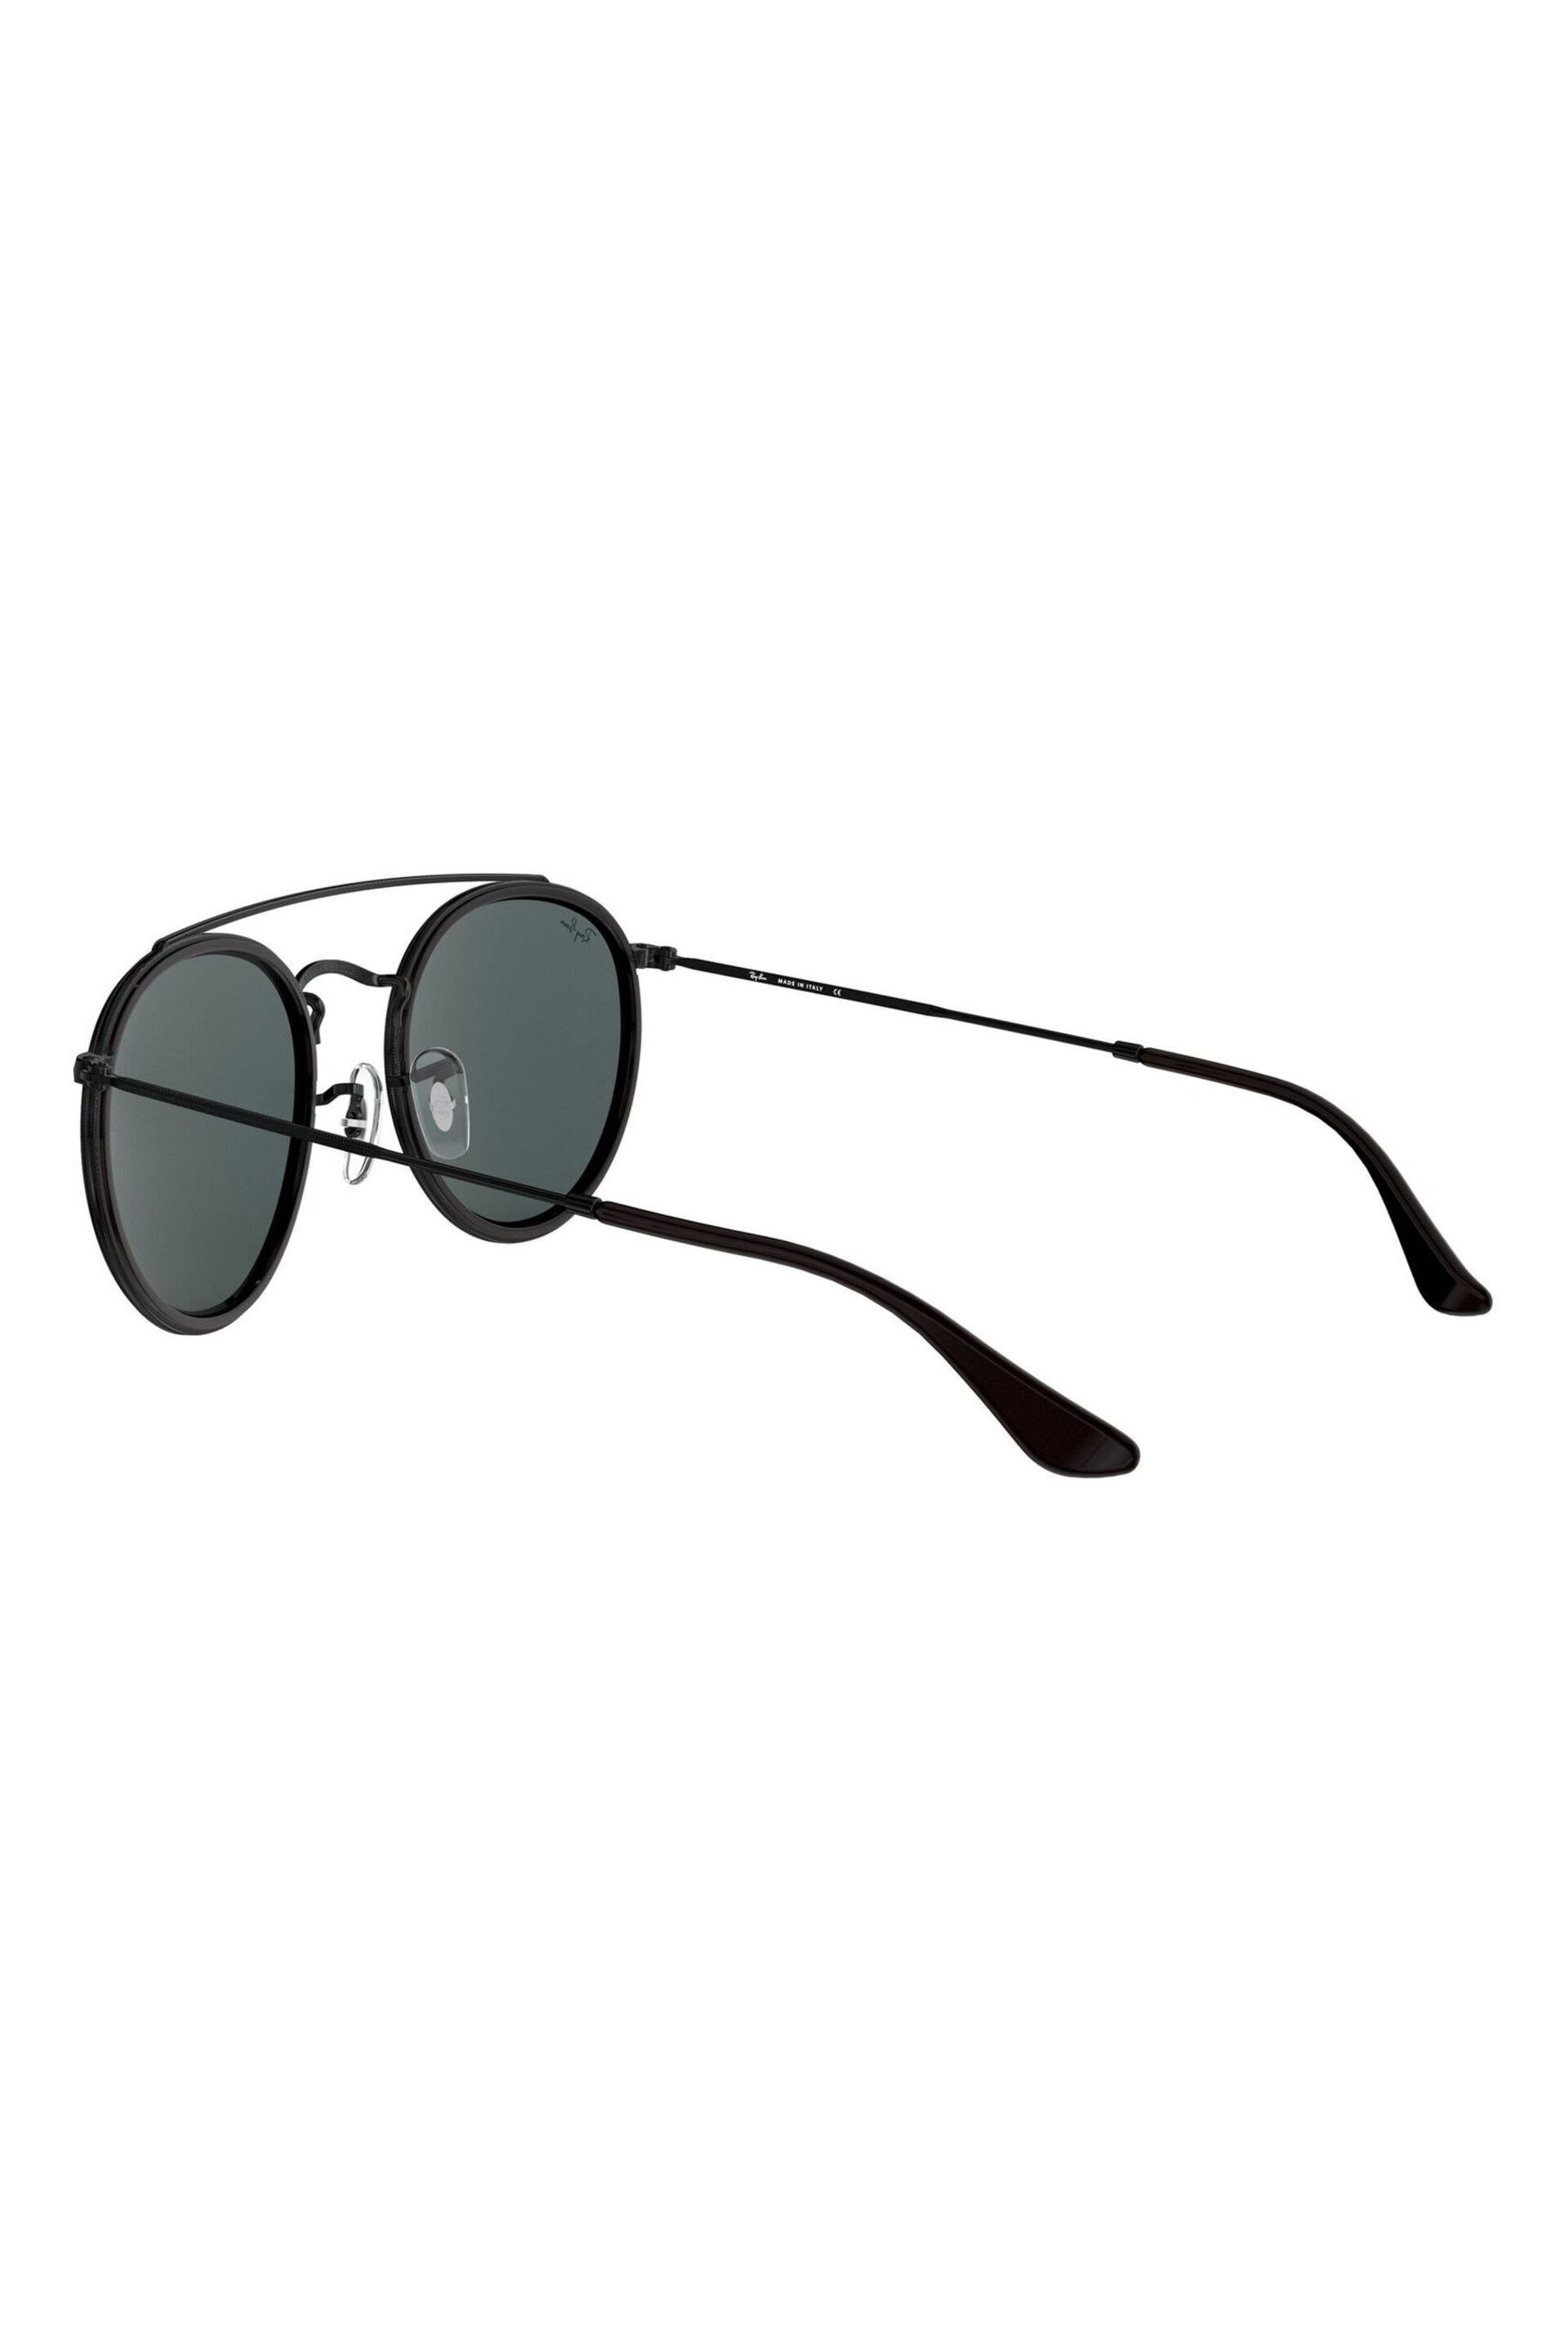 Ray-Ban Round Sunglasses - Image 5 of 14